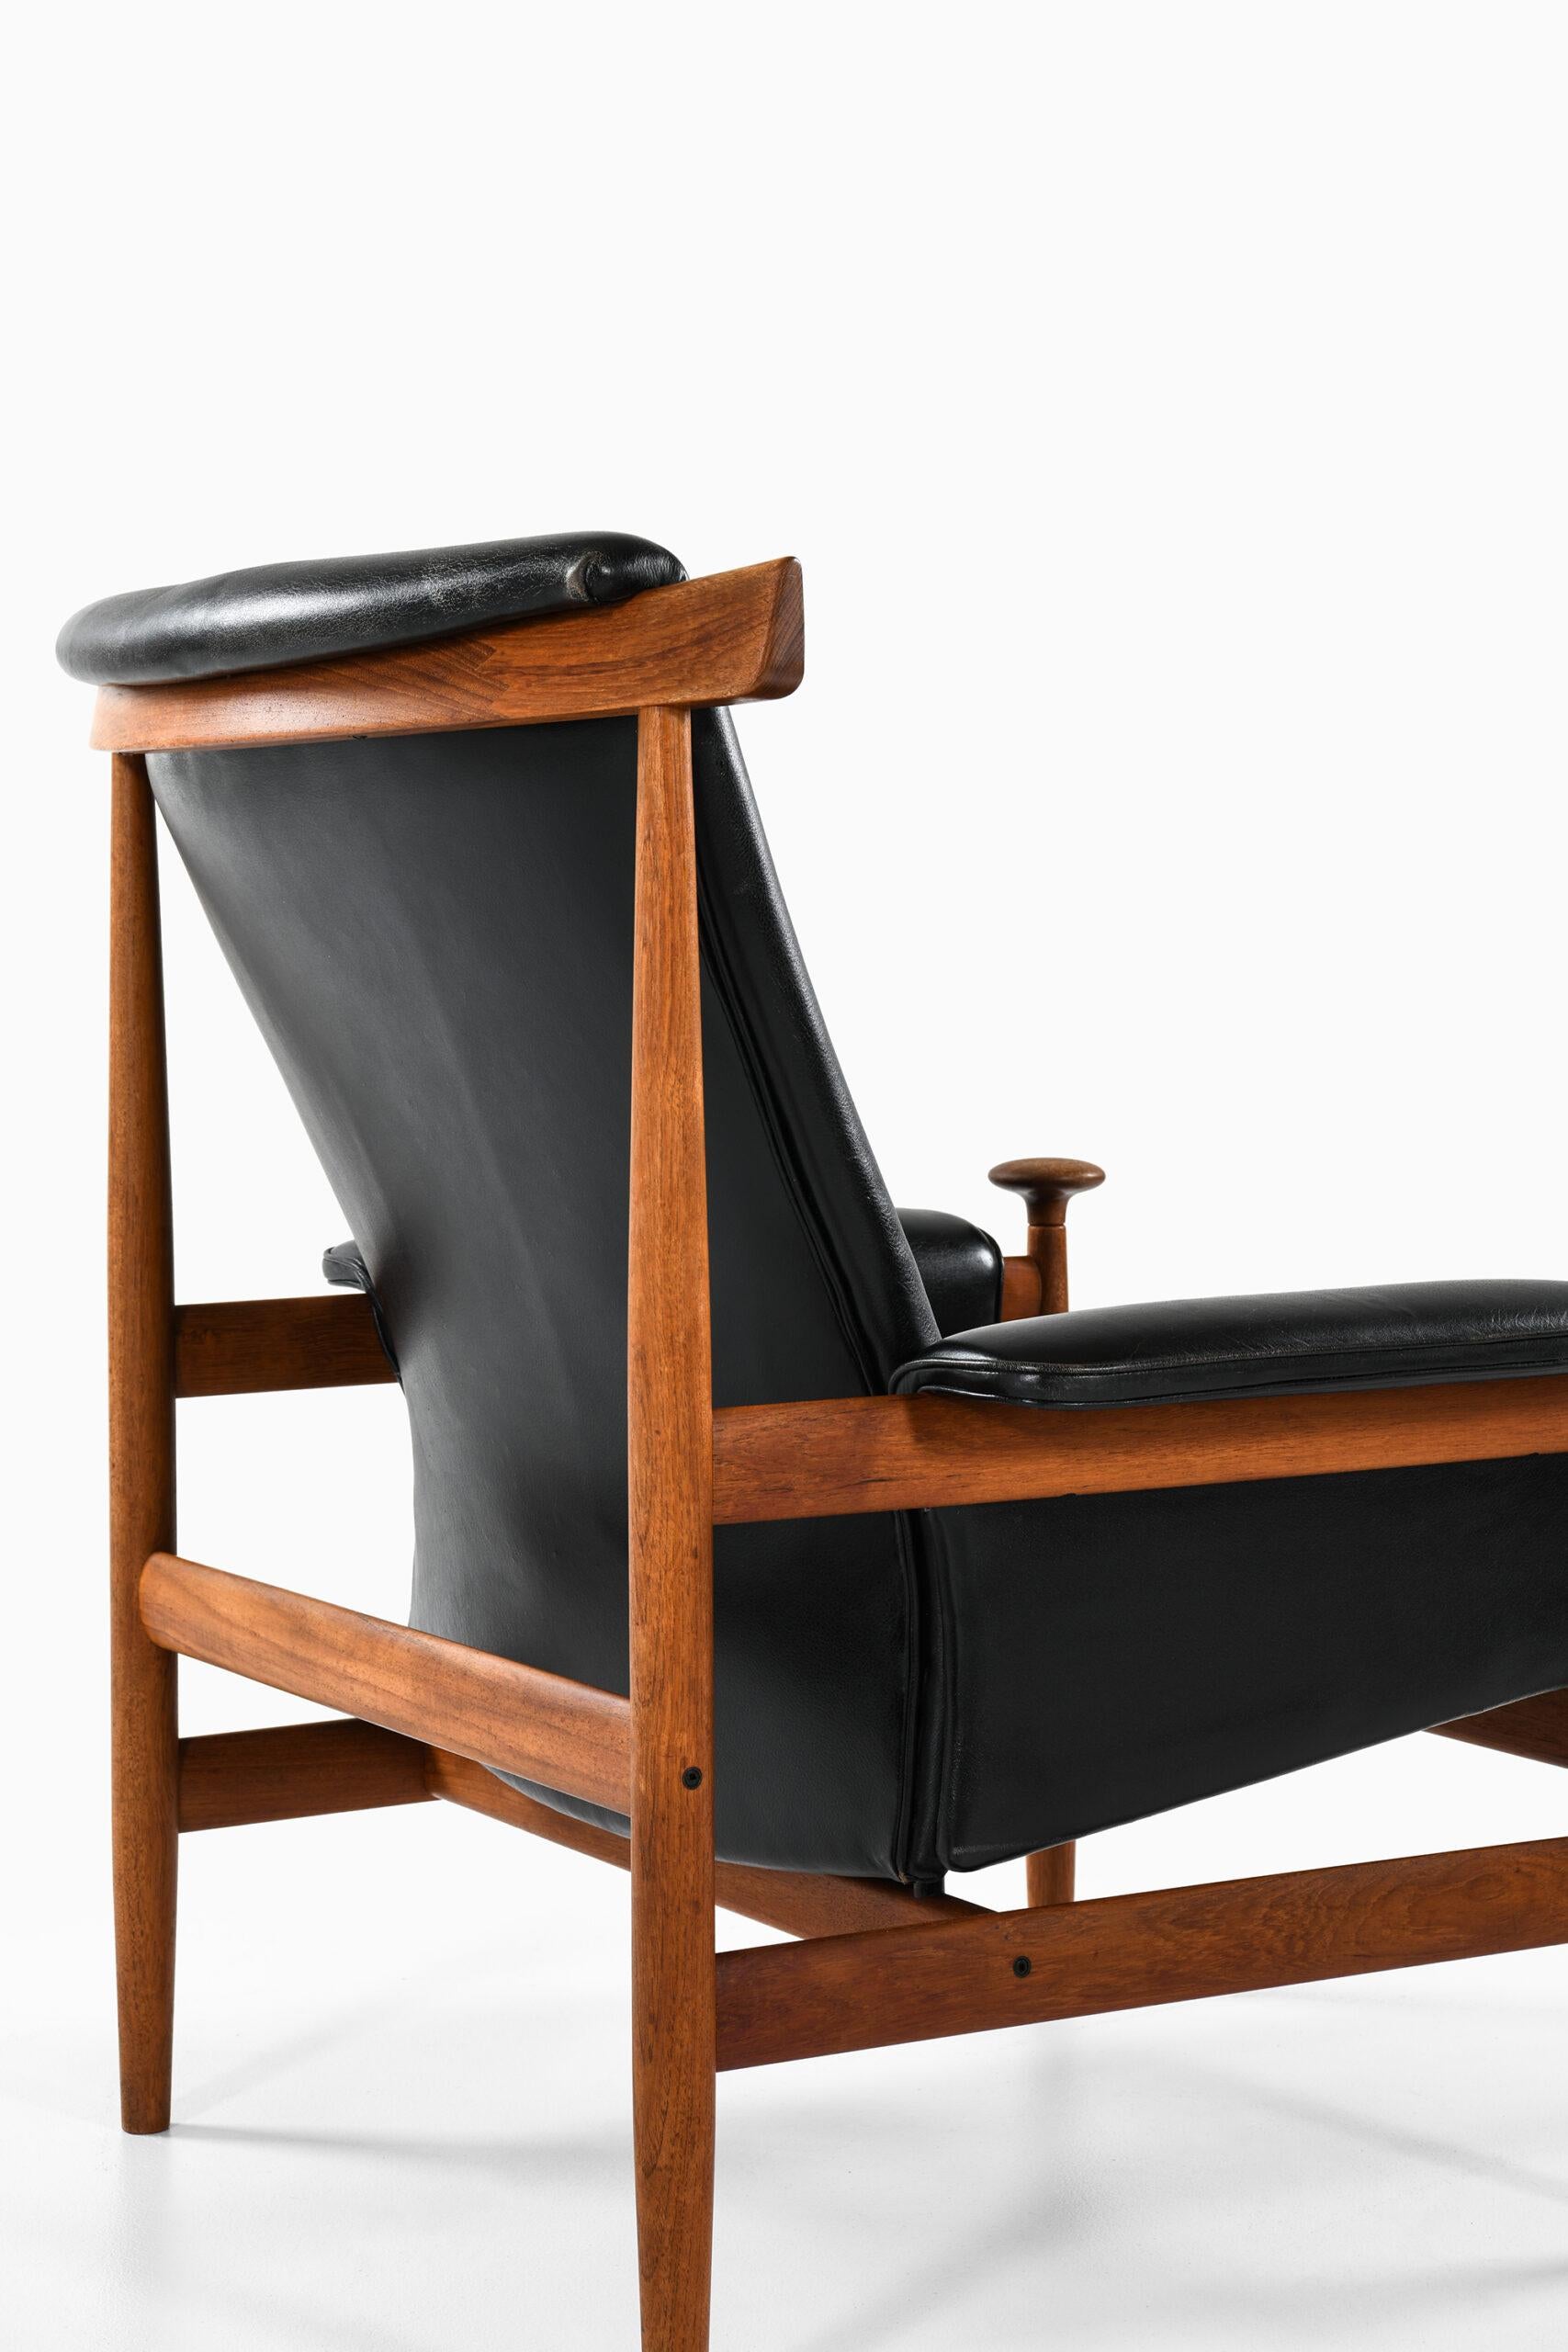 Leather Finn Juhl Easy Chair Model Bwana Produced by France & Daverkosen For Sale